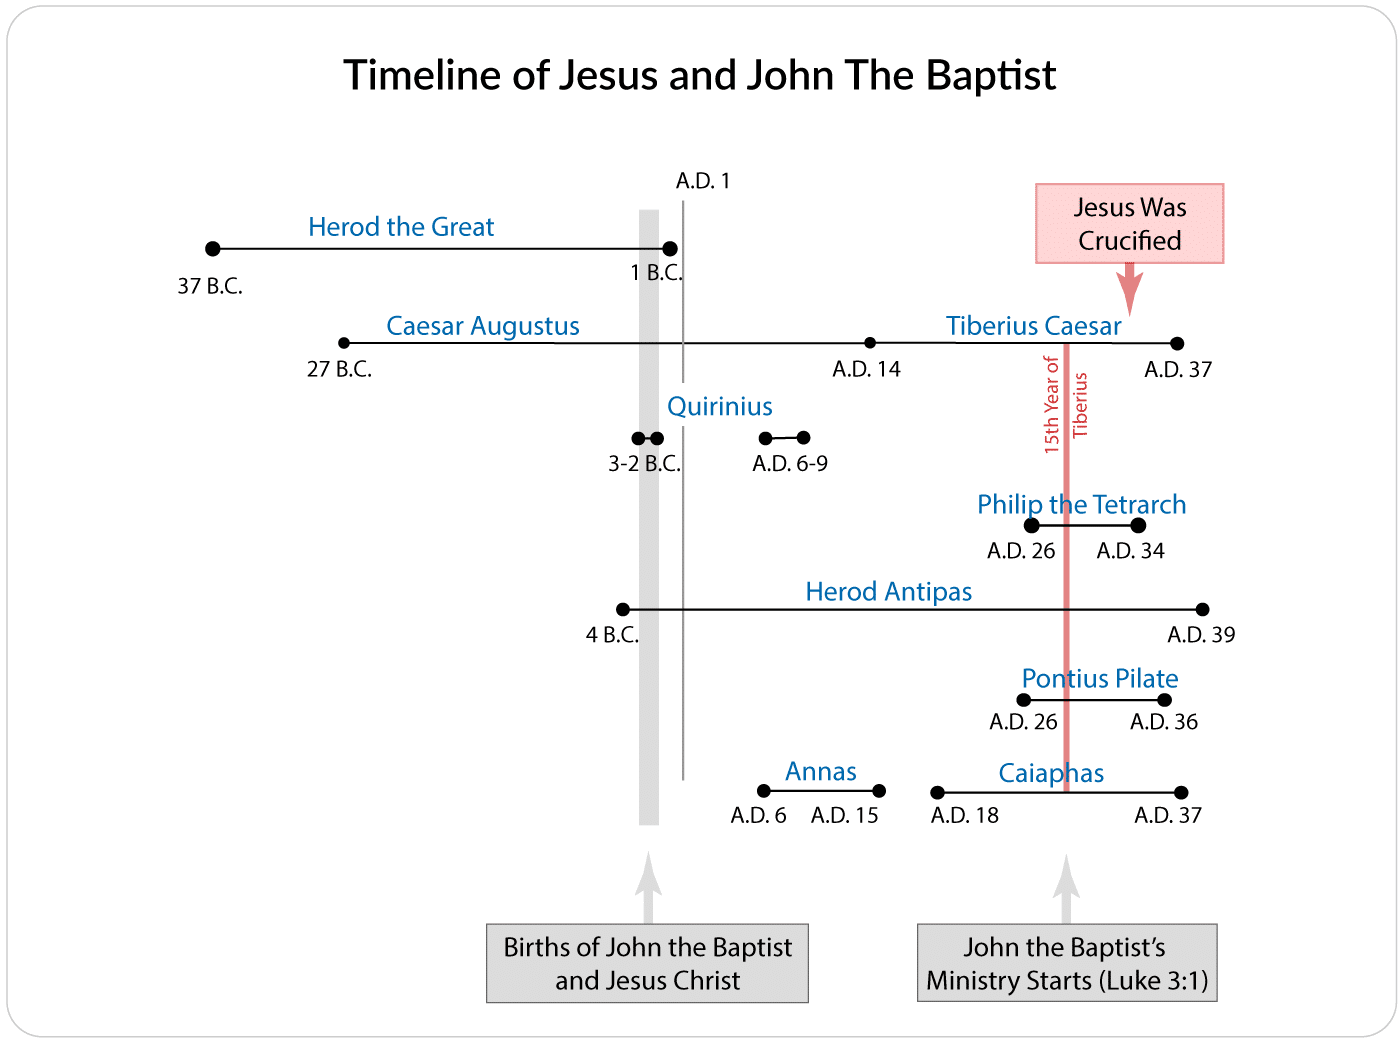 Timeline of Jesus' Birth and John the Baptist's Birth